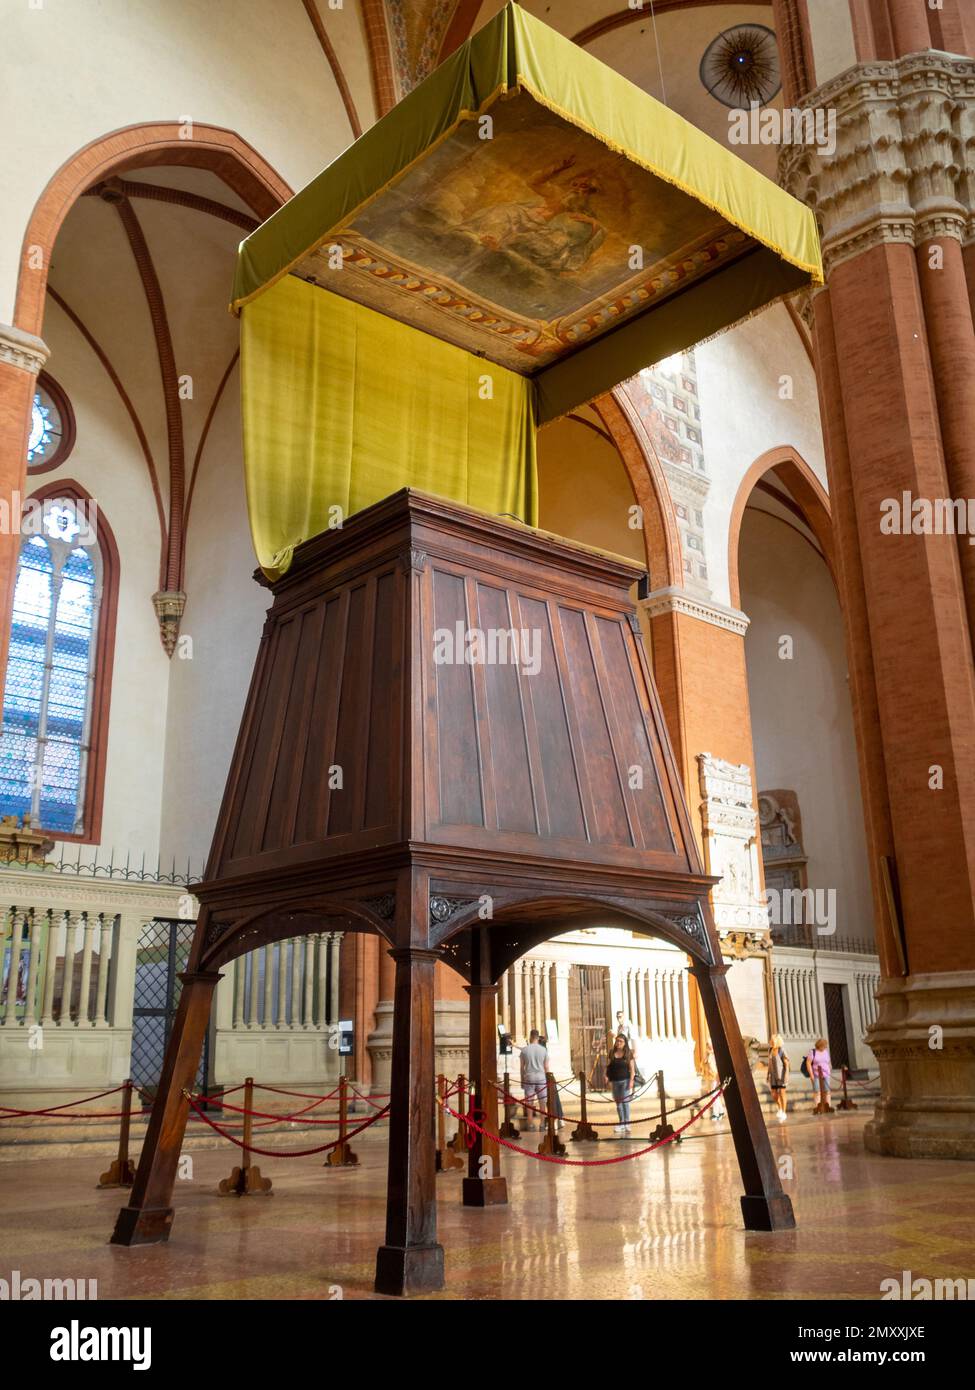 El gigantesco púlpito móvil de madera de la Basílica de San Petronio, Bolonia Foto de stock